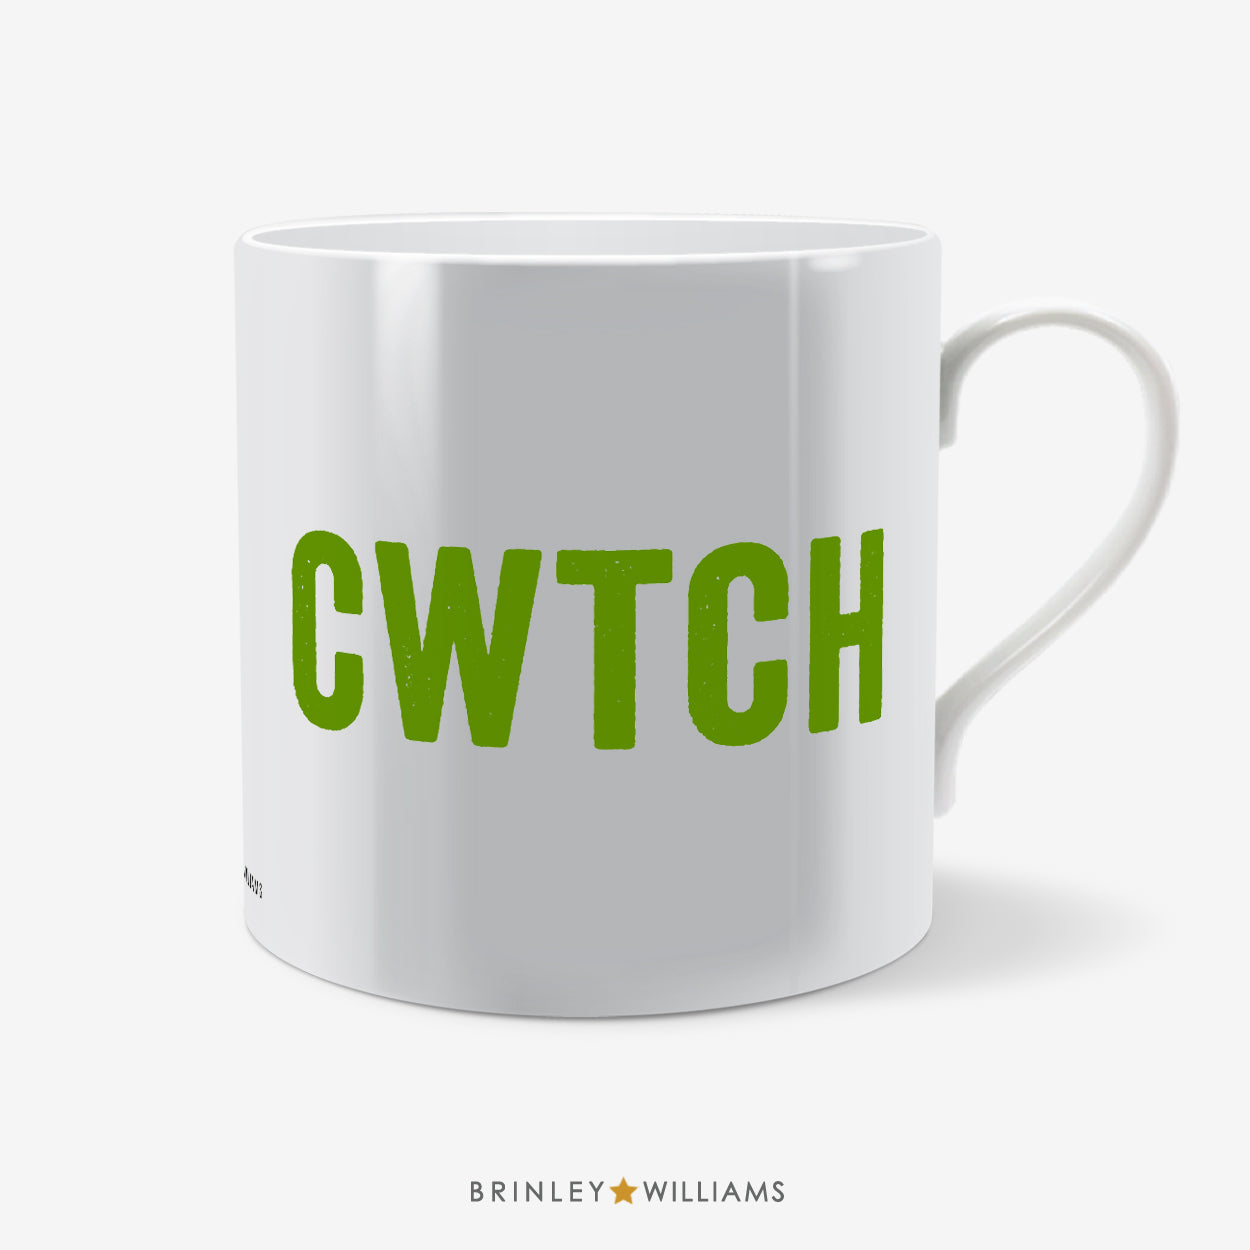 Cwtch Welsh Mug - Green